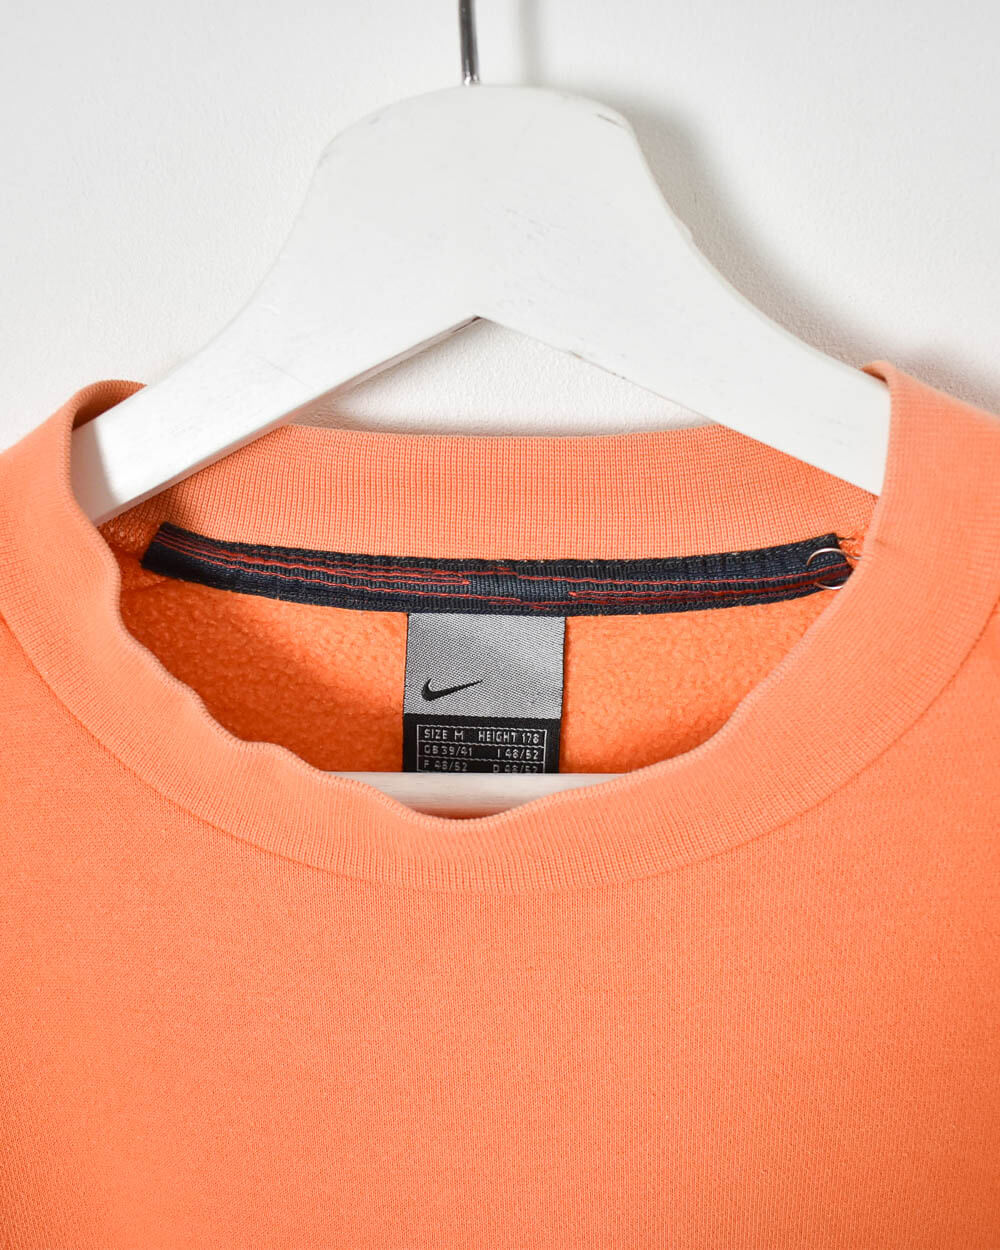 Orange Nike Sweatshirt - Medium